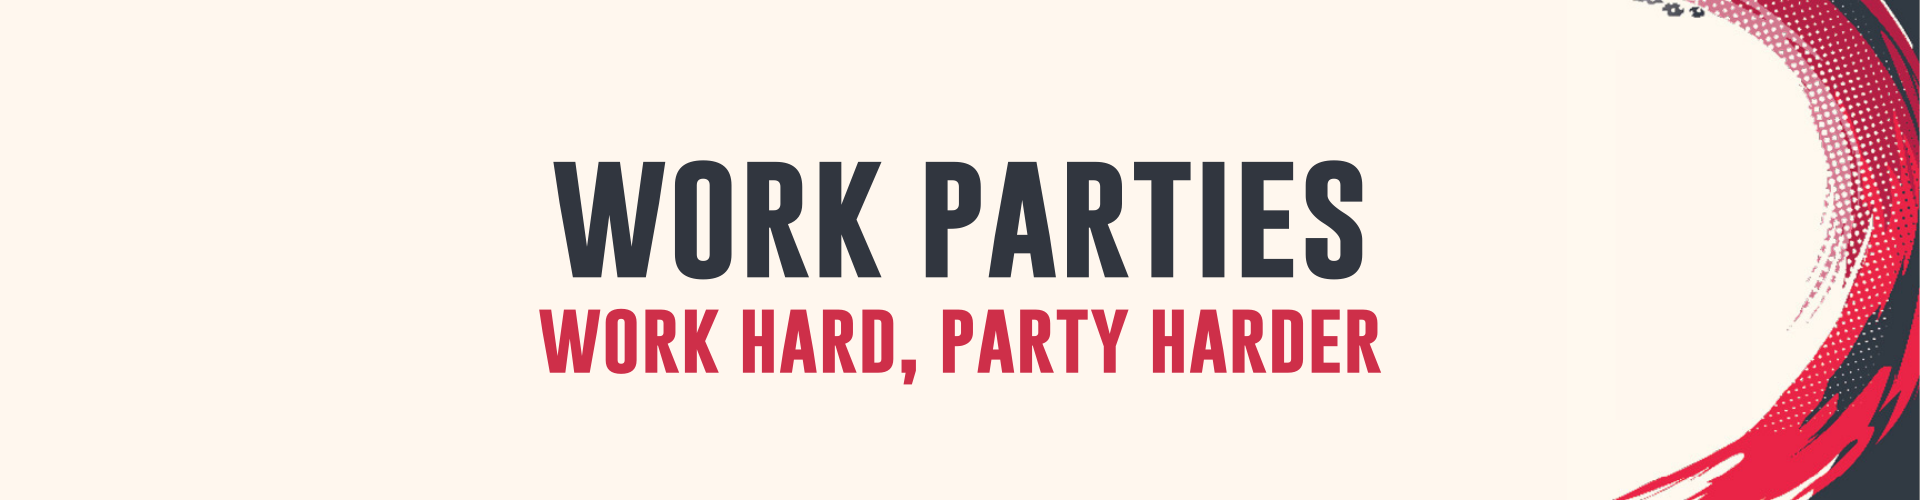 Work Parties - Work hard, party harder